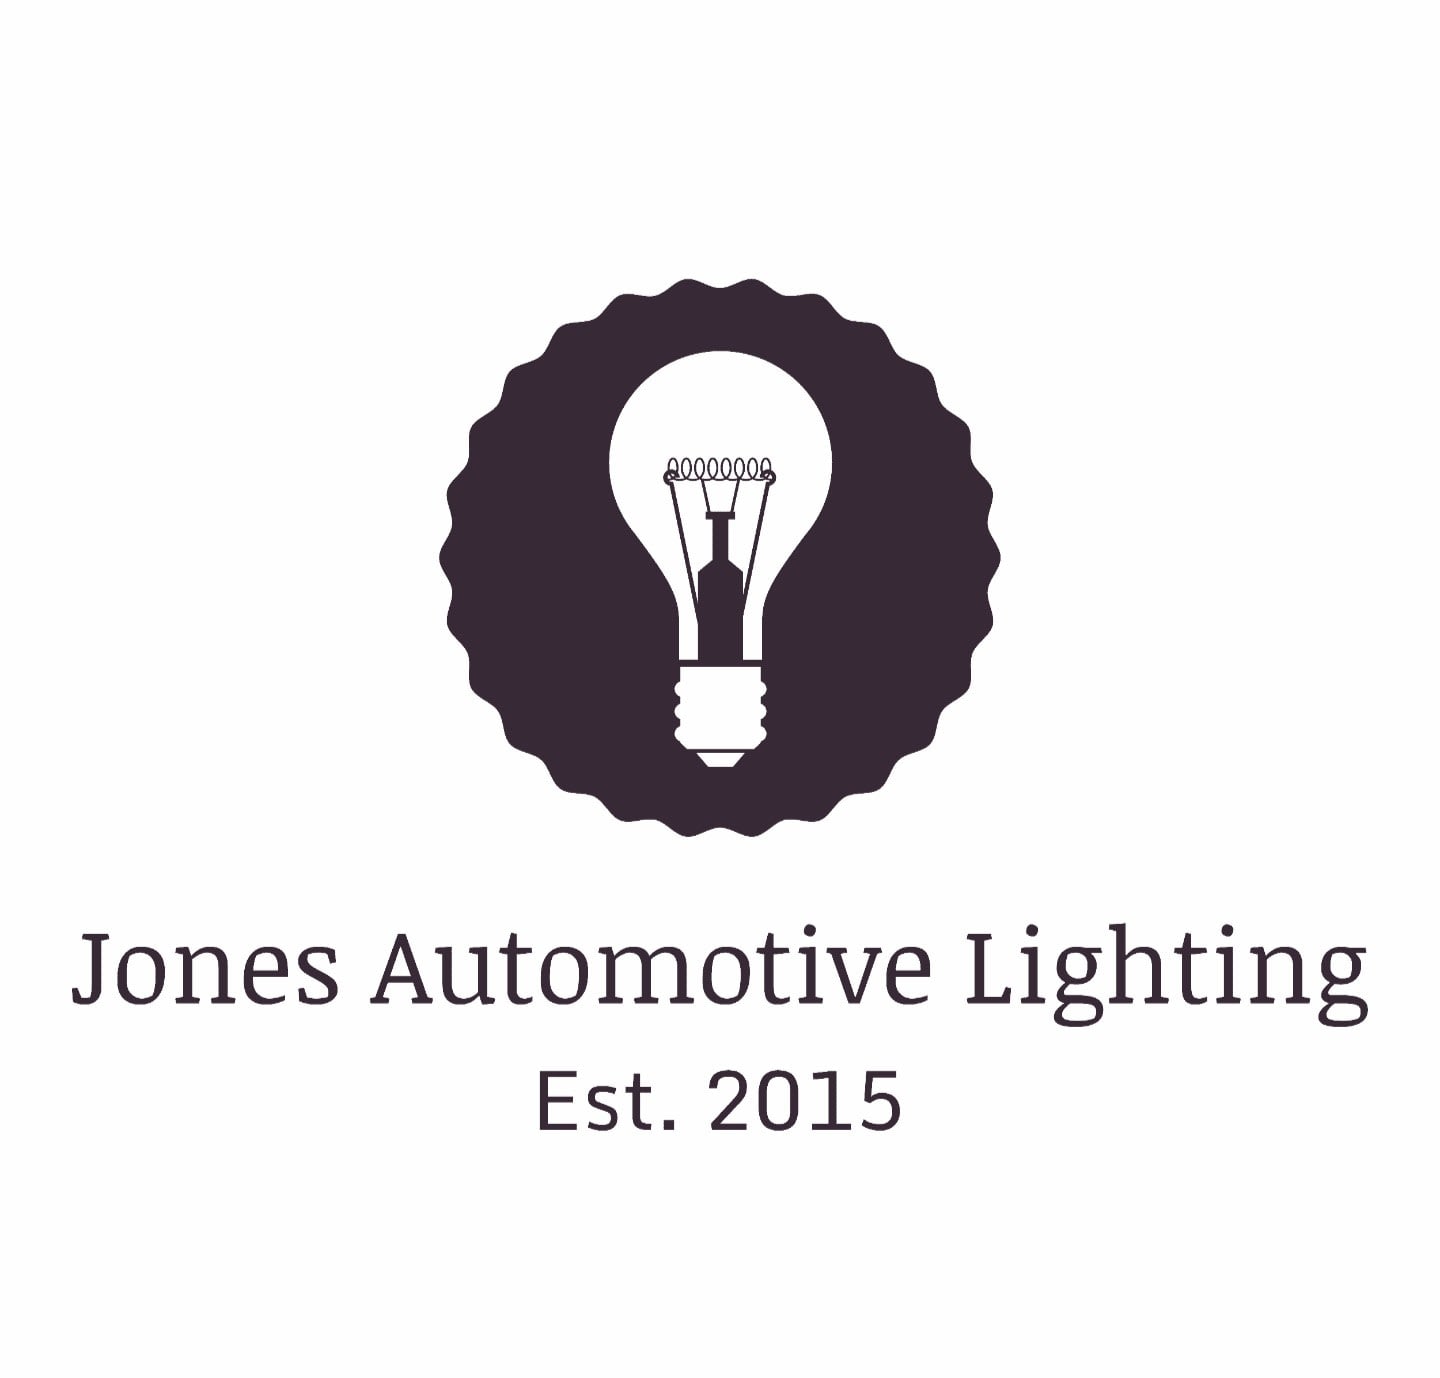 Jones Automotive Lighting